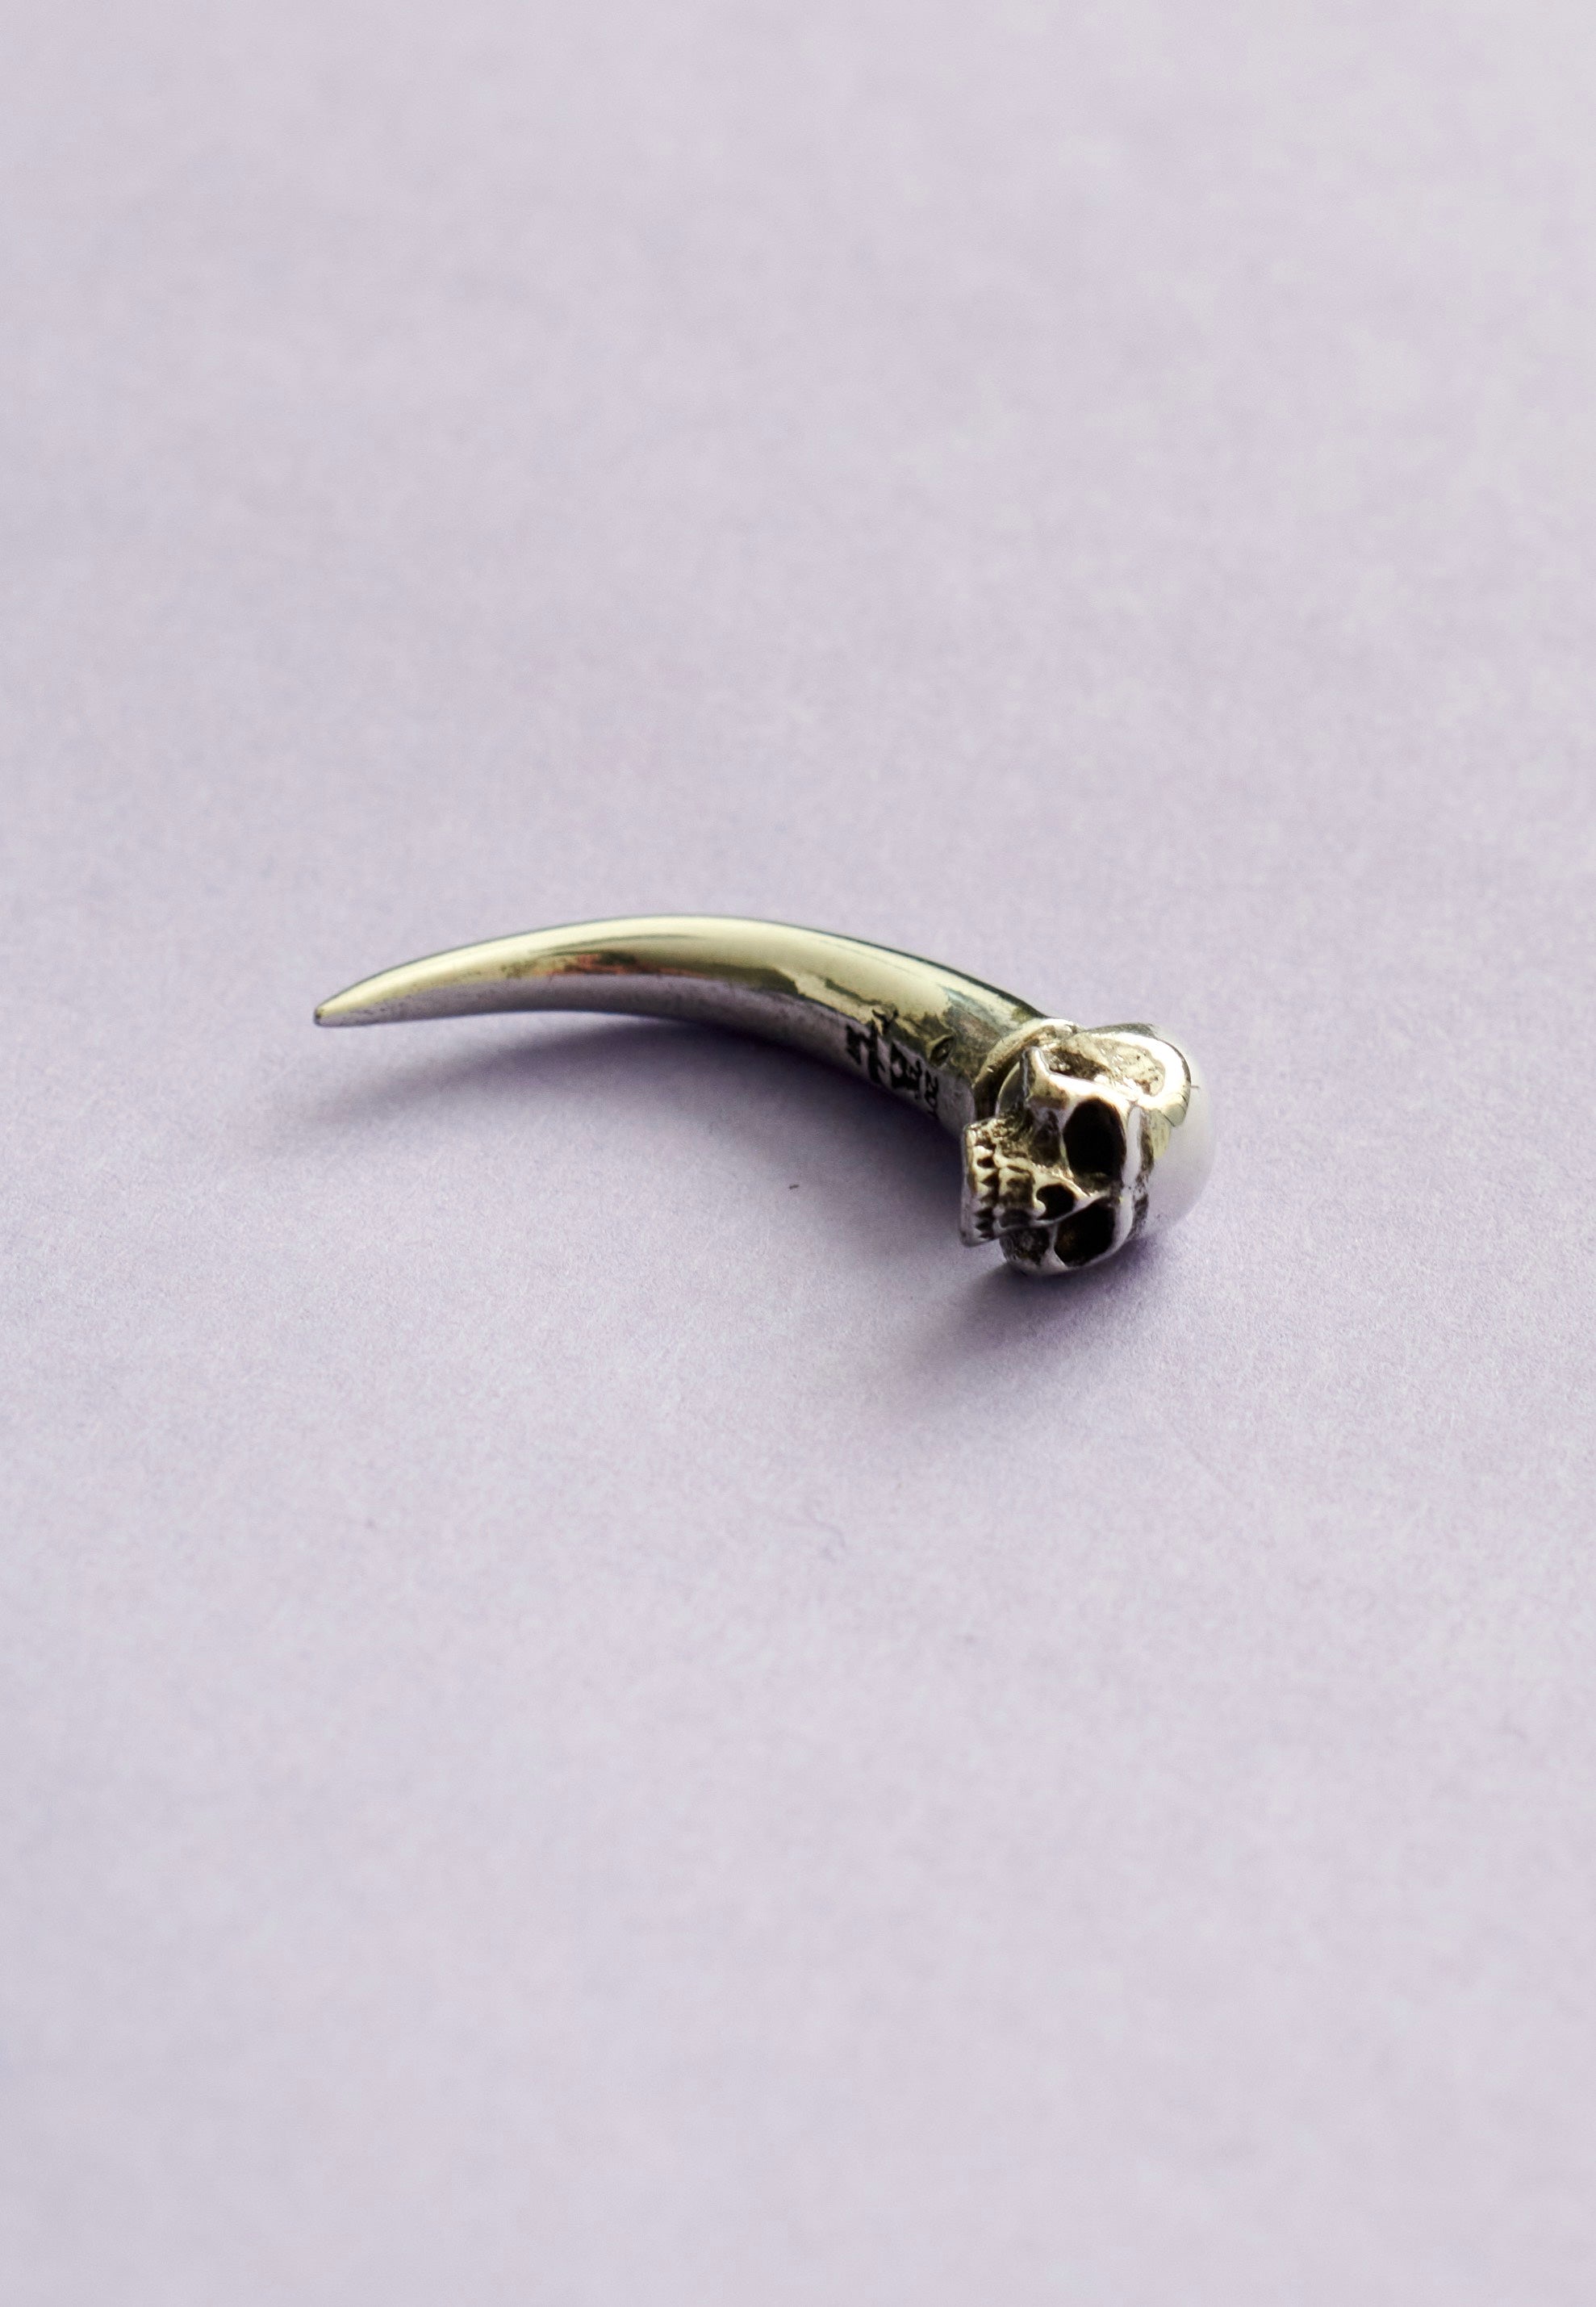 Alchemy England - Tomb Skull Horn Silver - Earring